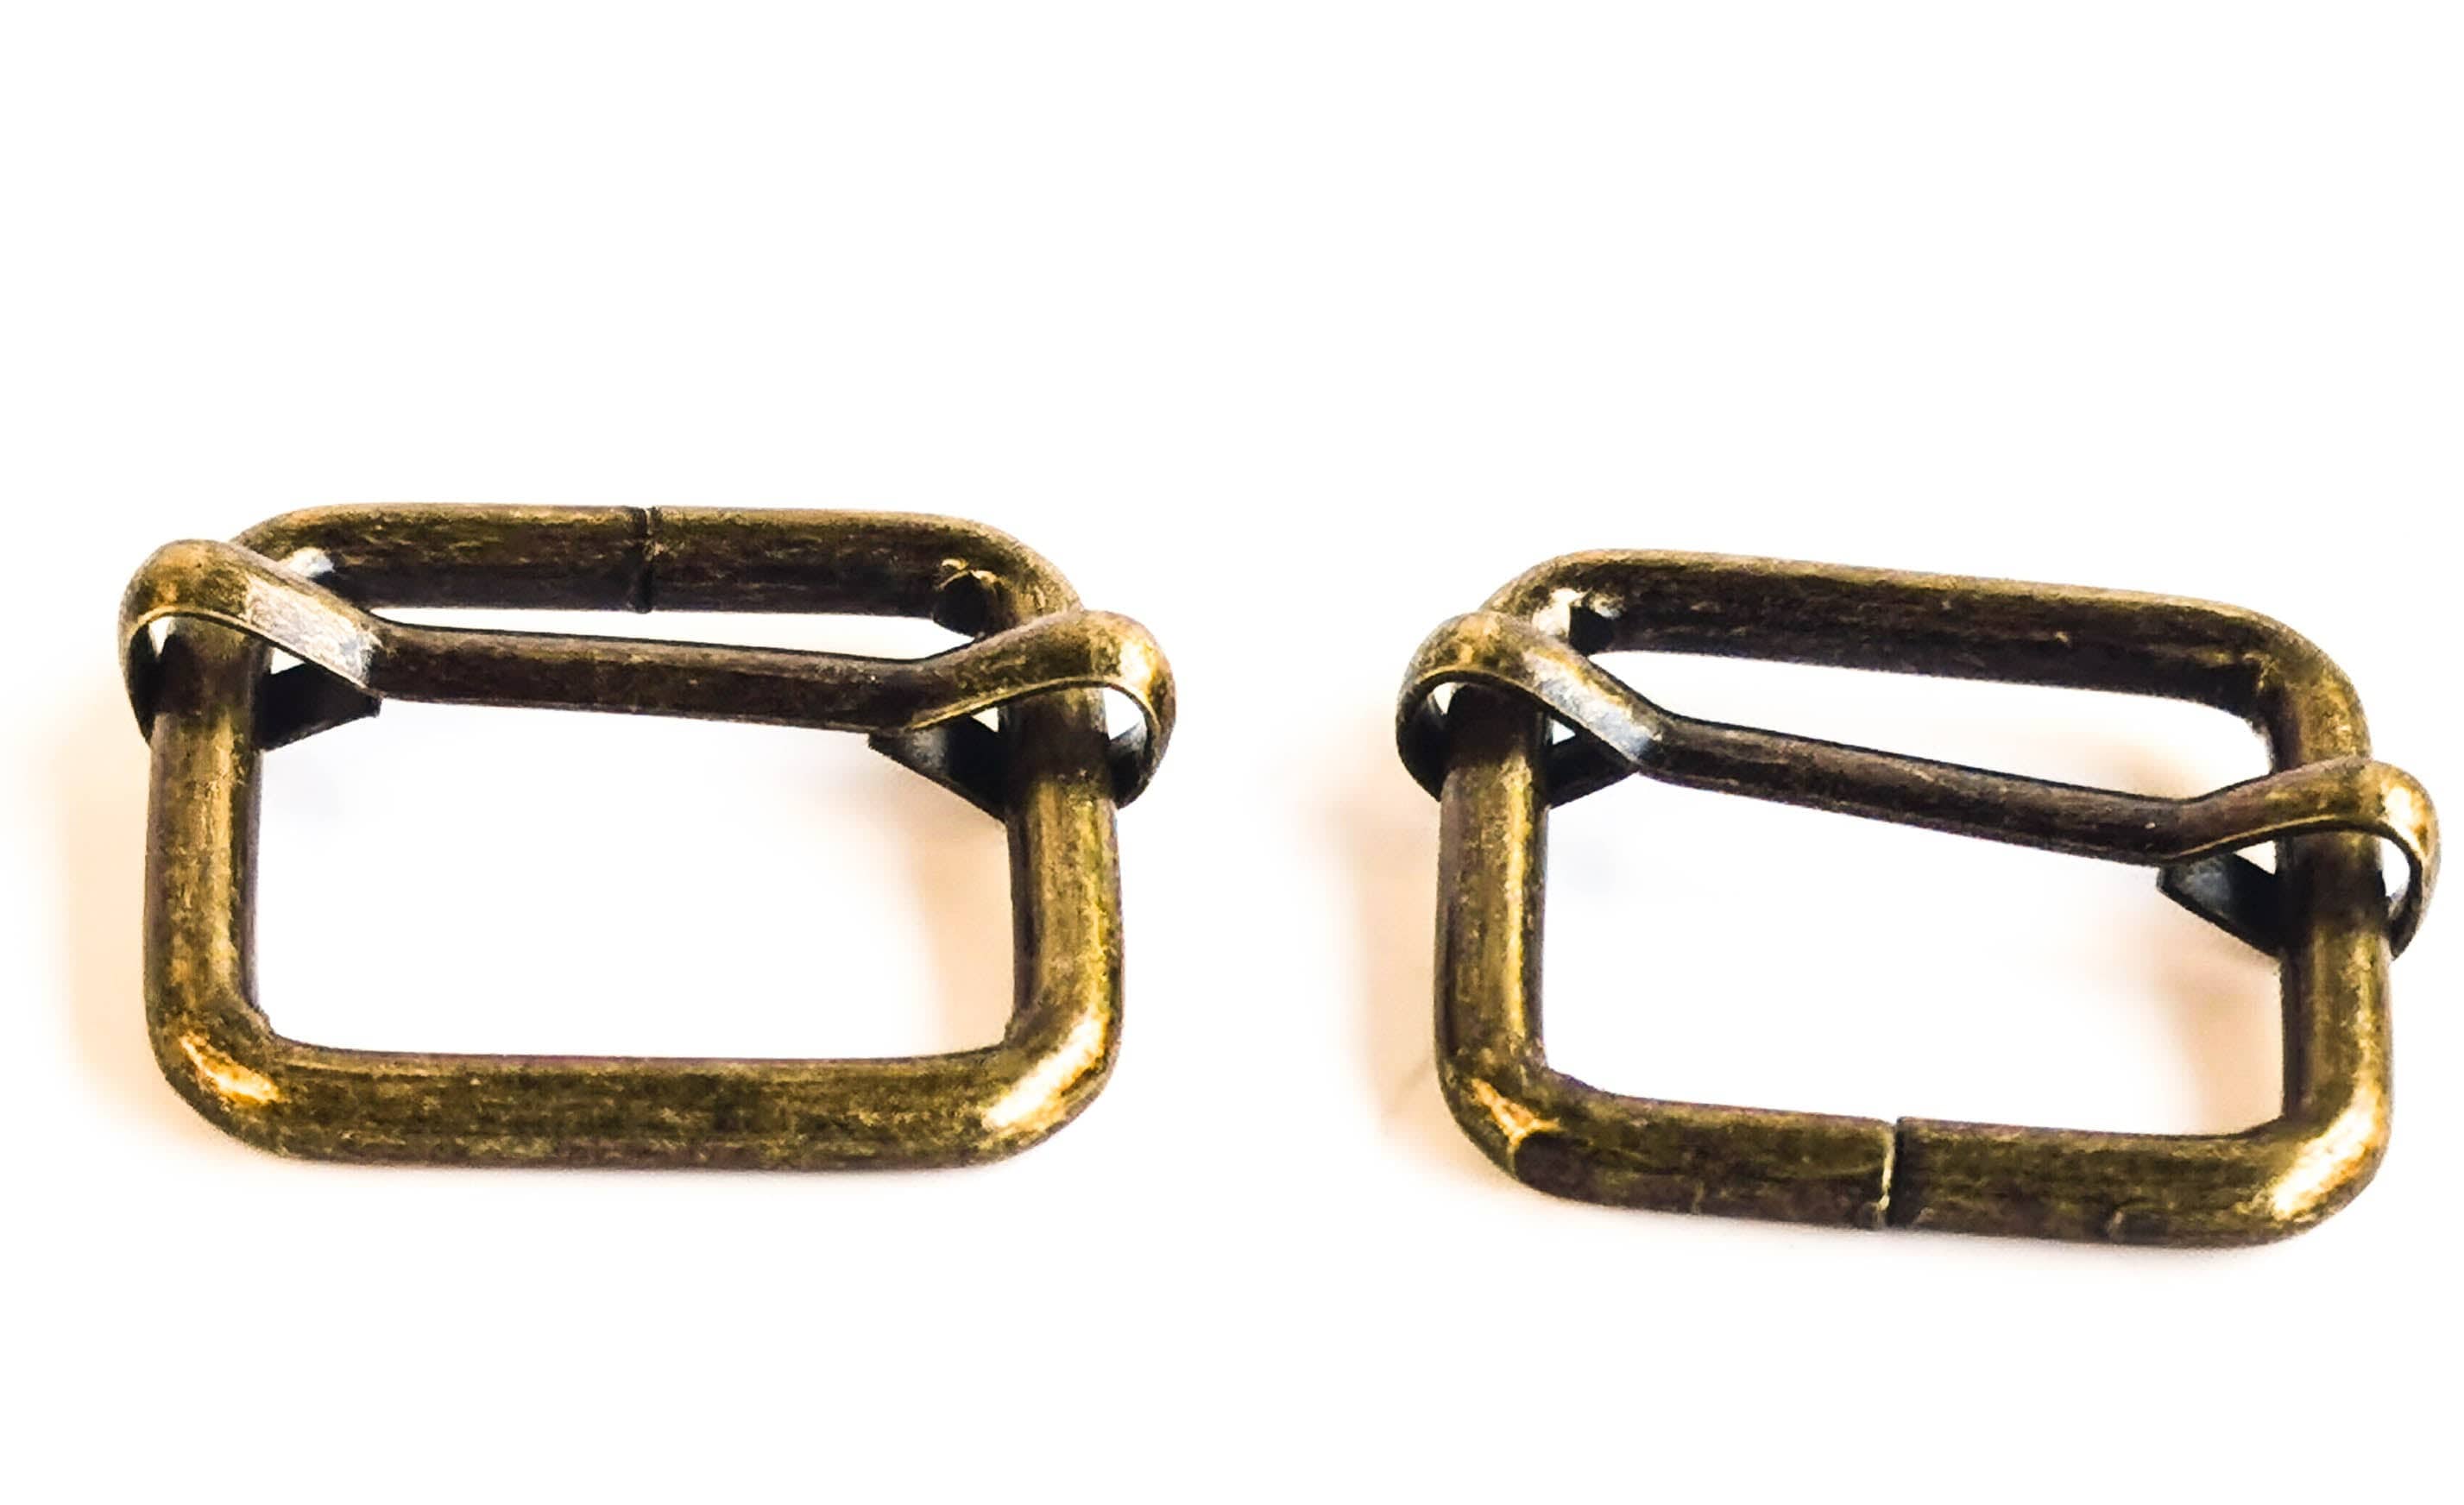 Kiwi Bagineers Sliders 3/4" (18mm) / Antique Brass Adjustable Strap Sliders for bags by Kiwi Bagineers